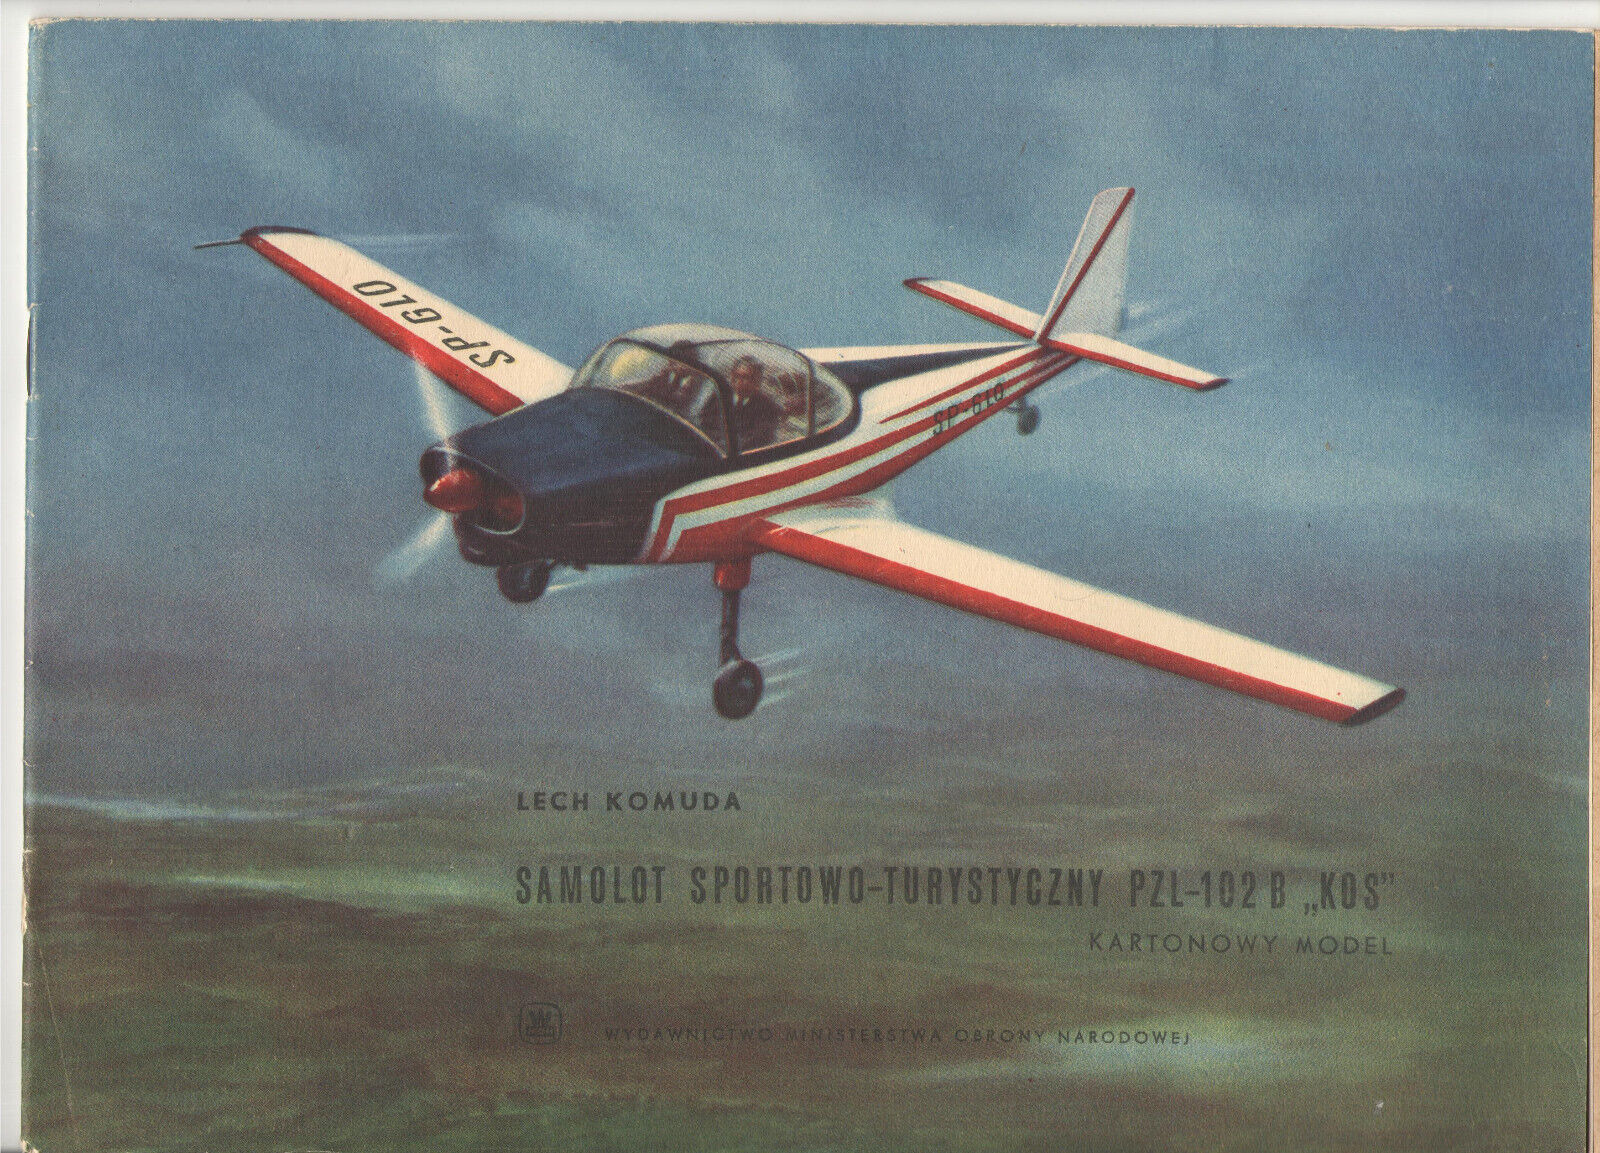 VTG 1950s-60s POLISH AIRPLANE PAPER MODEL SPORTS/TOURIST AIRCRAFT PZL-102B KOS